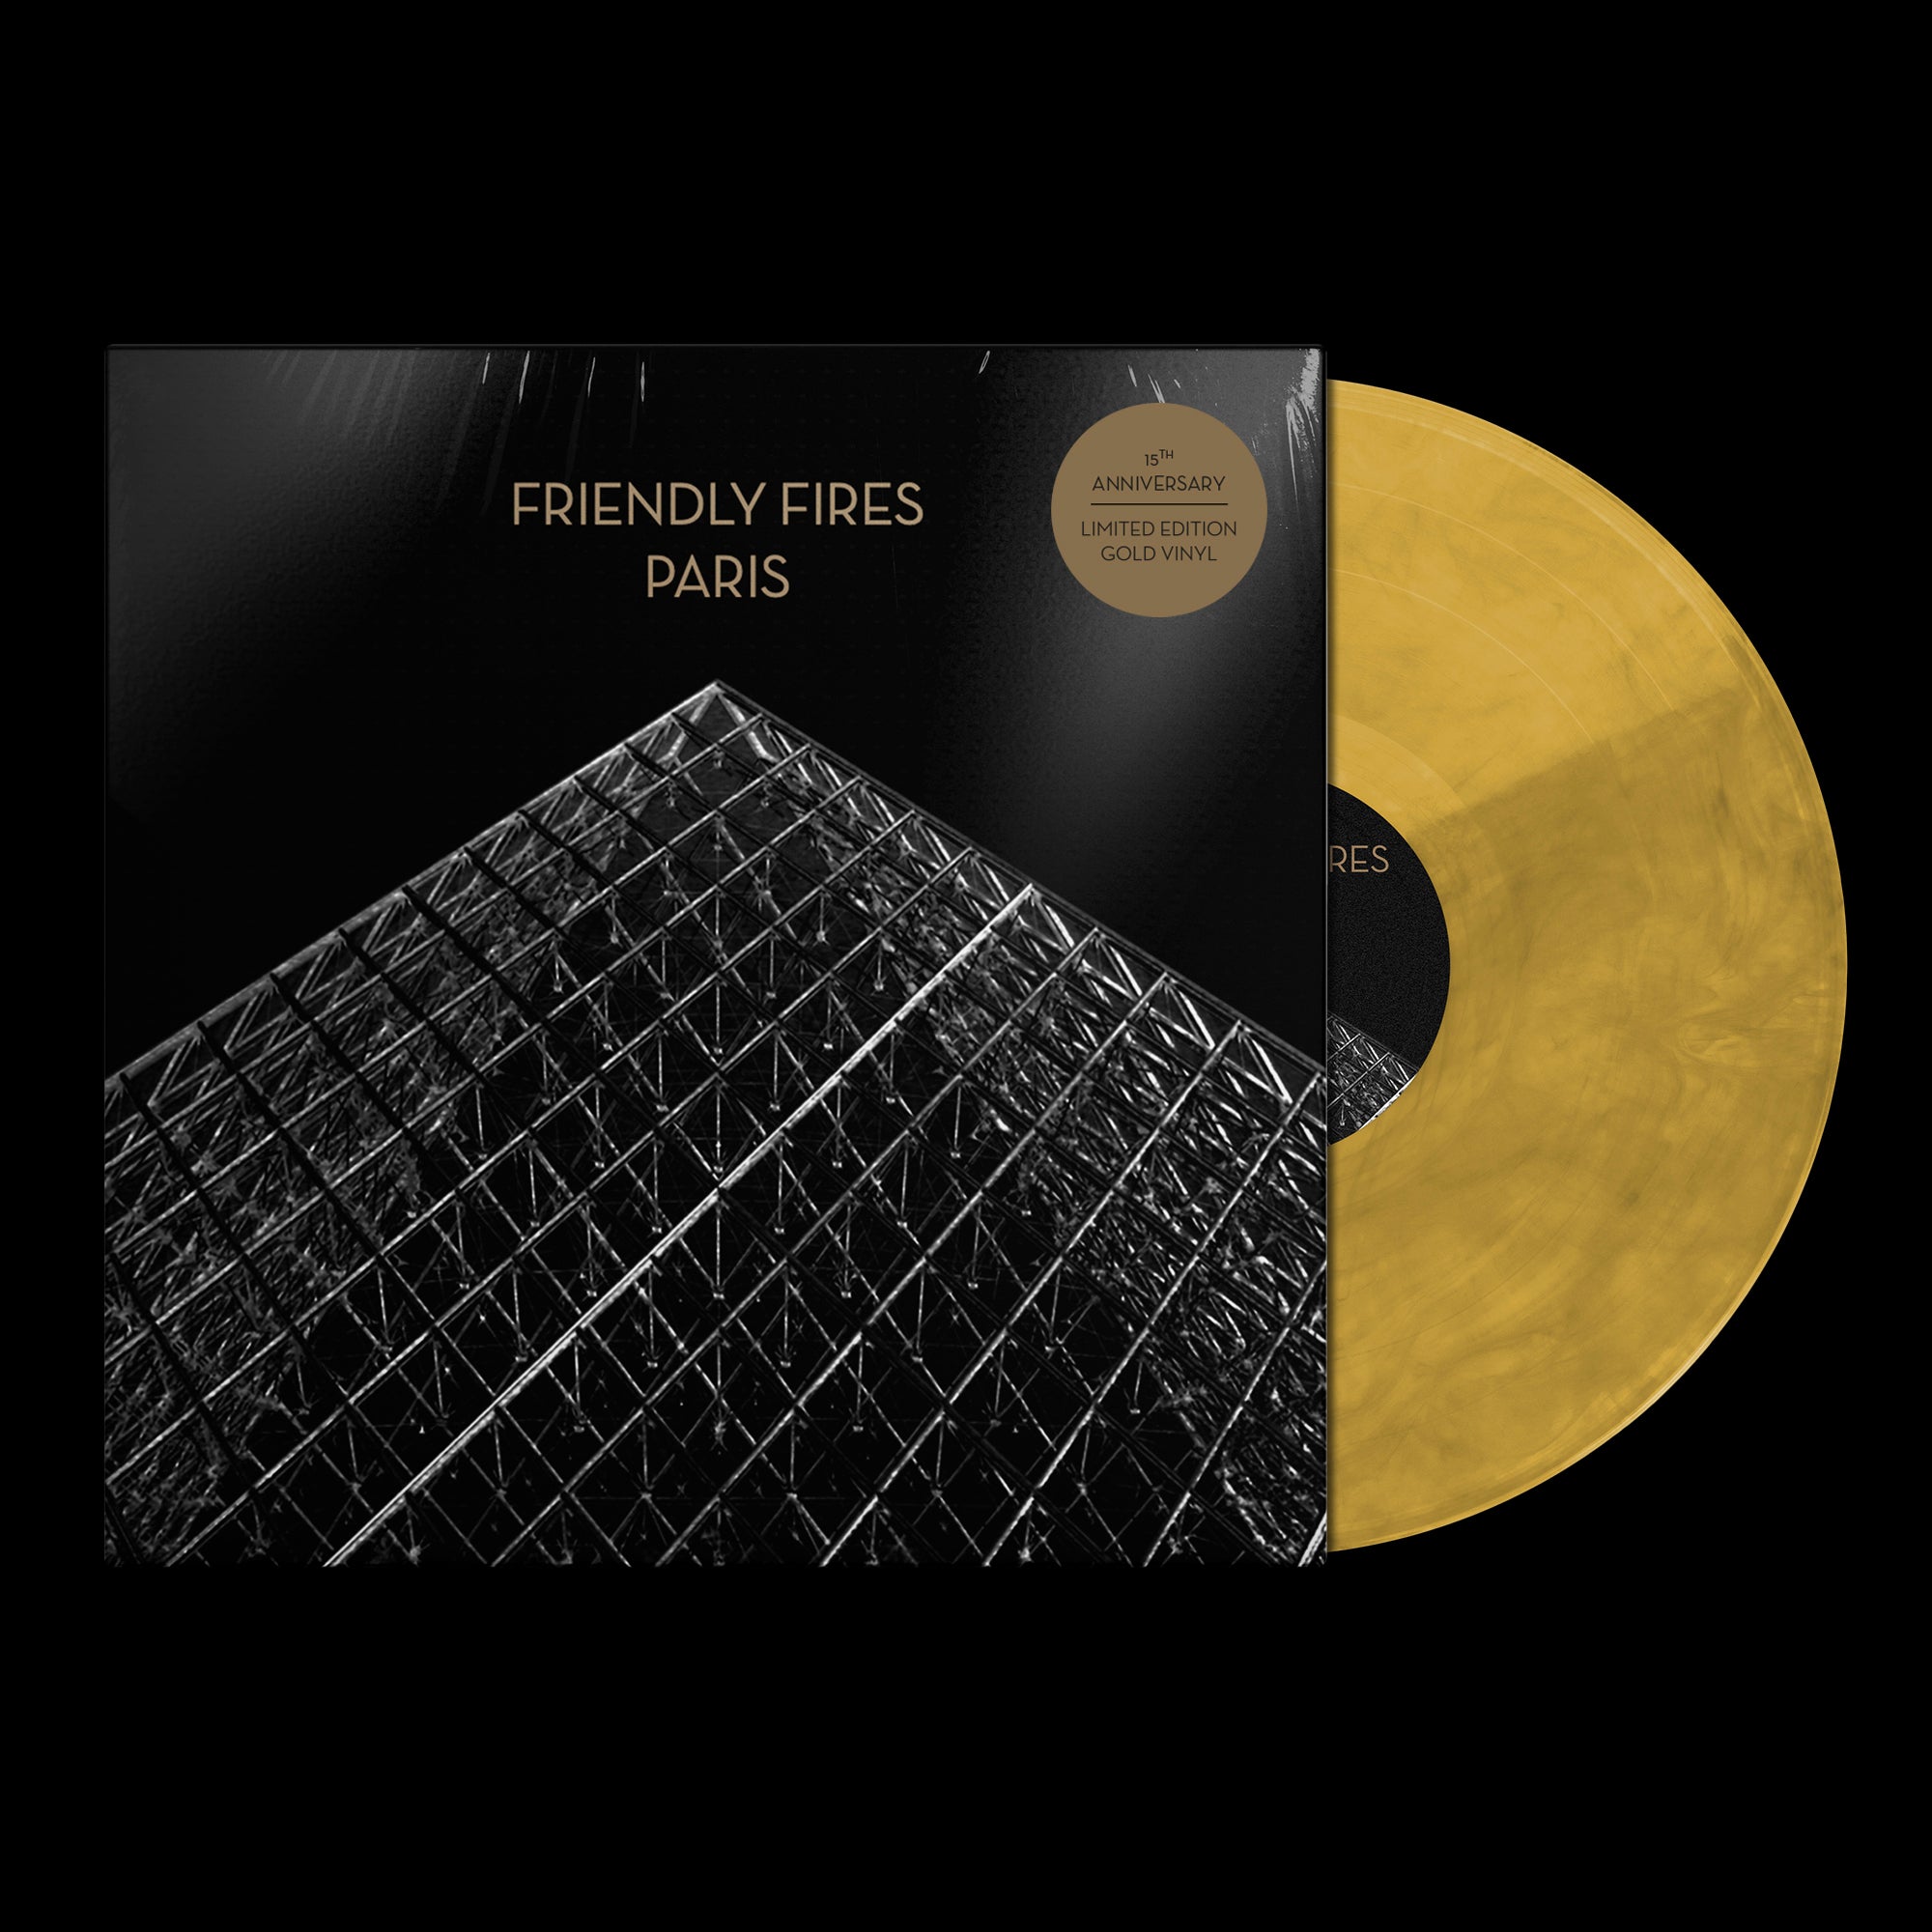 Paris (15th Anniversary Edition): Limited Gold Vinyl 12" Single